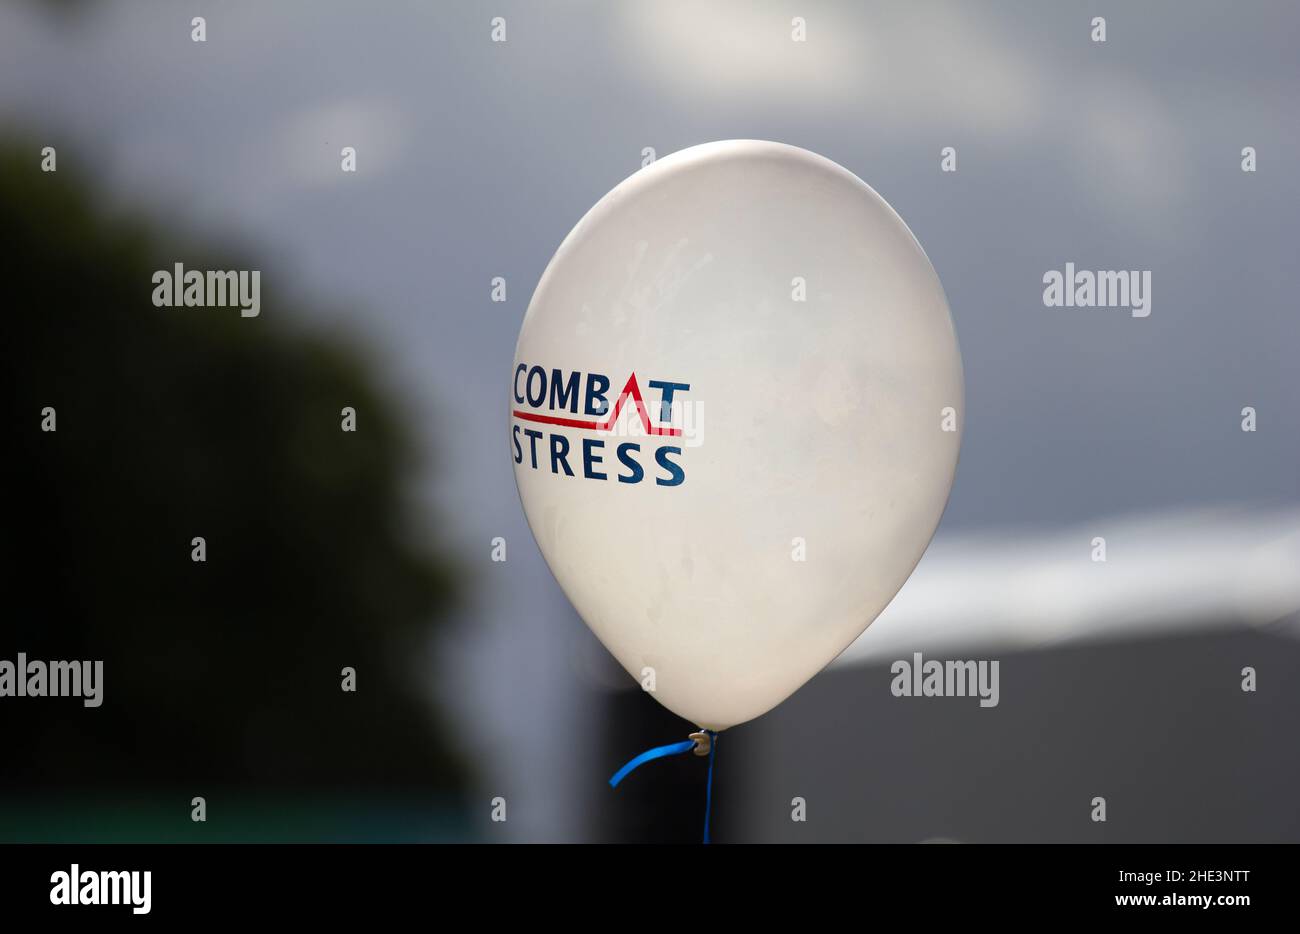 Combat Stress. A combat stress balloon against a dark sky but sunlit, promoting the veteran's mental health organisation. Stock Photo